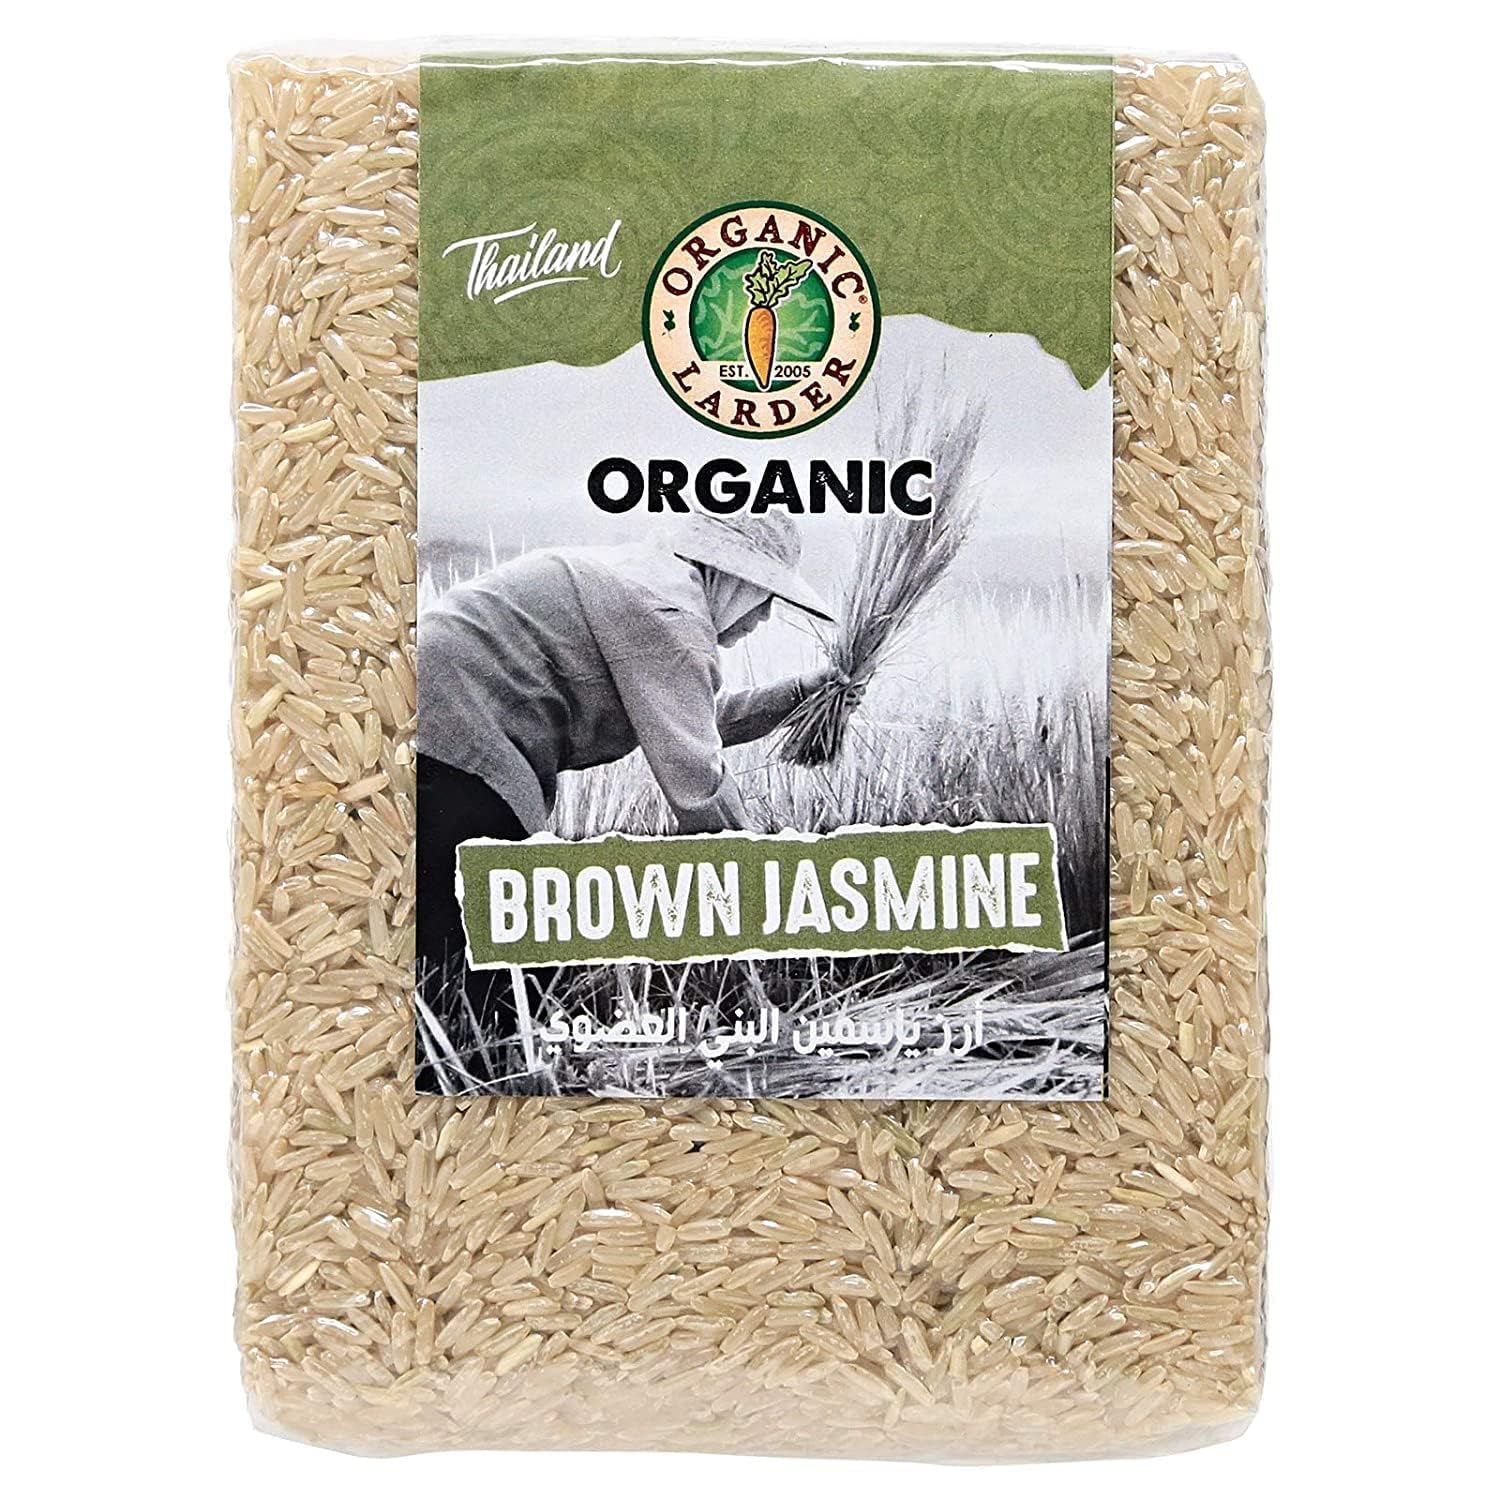 ORGANIC LARDER Brown Jasmine Rice, 1Kg - Organic, Vegan, Natural